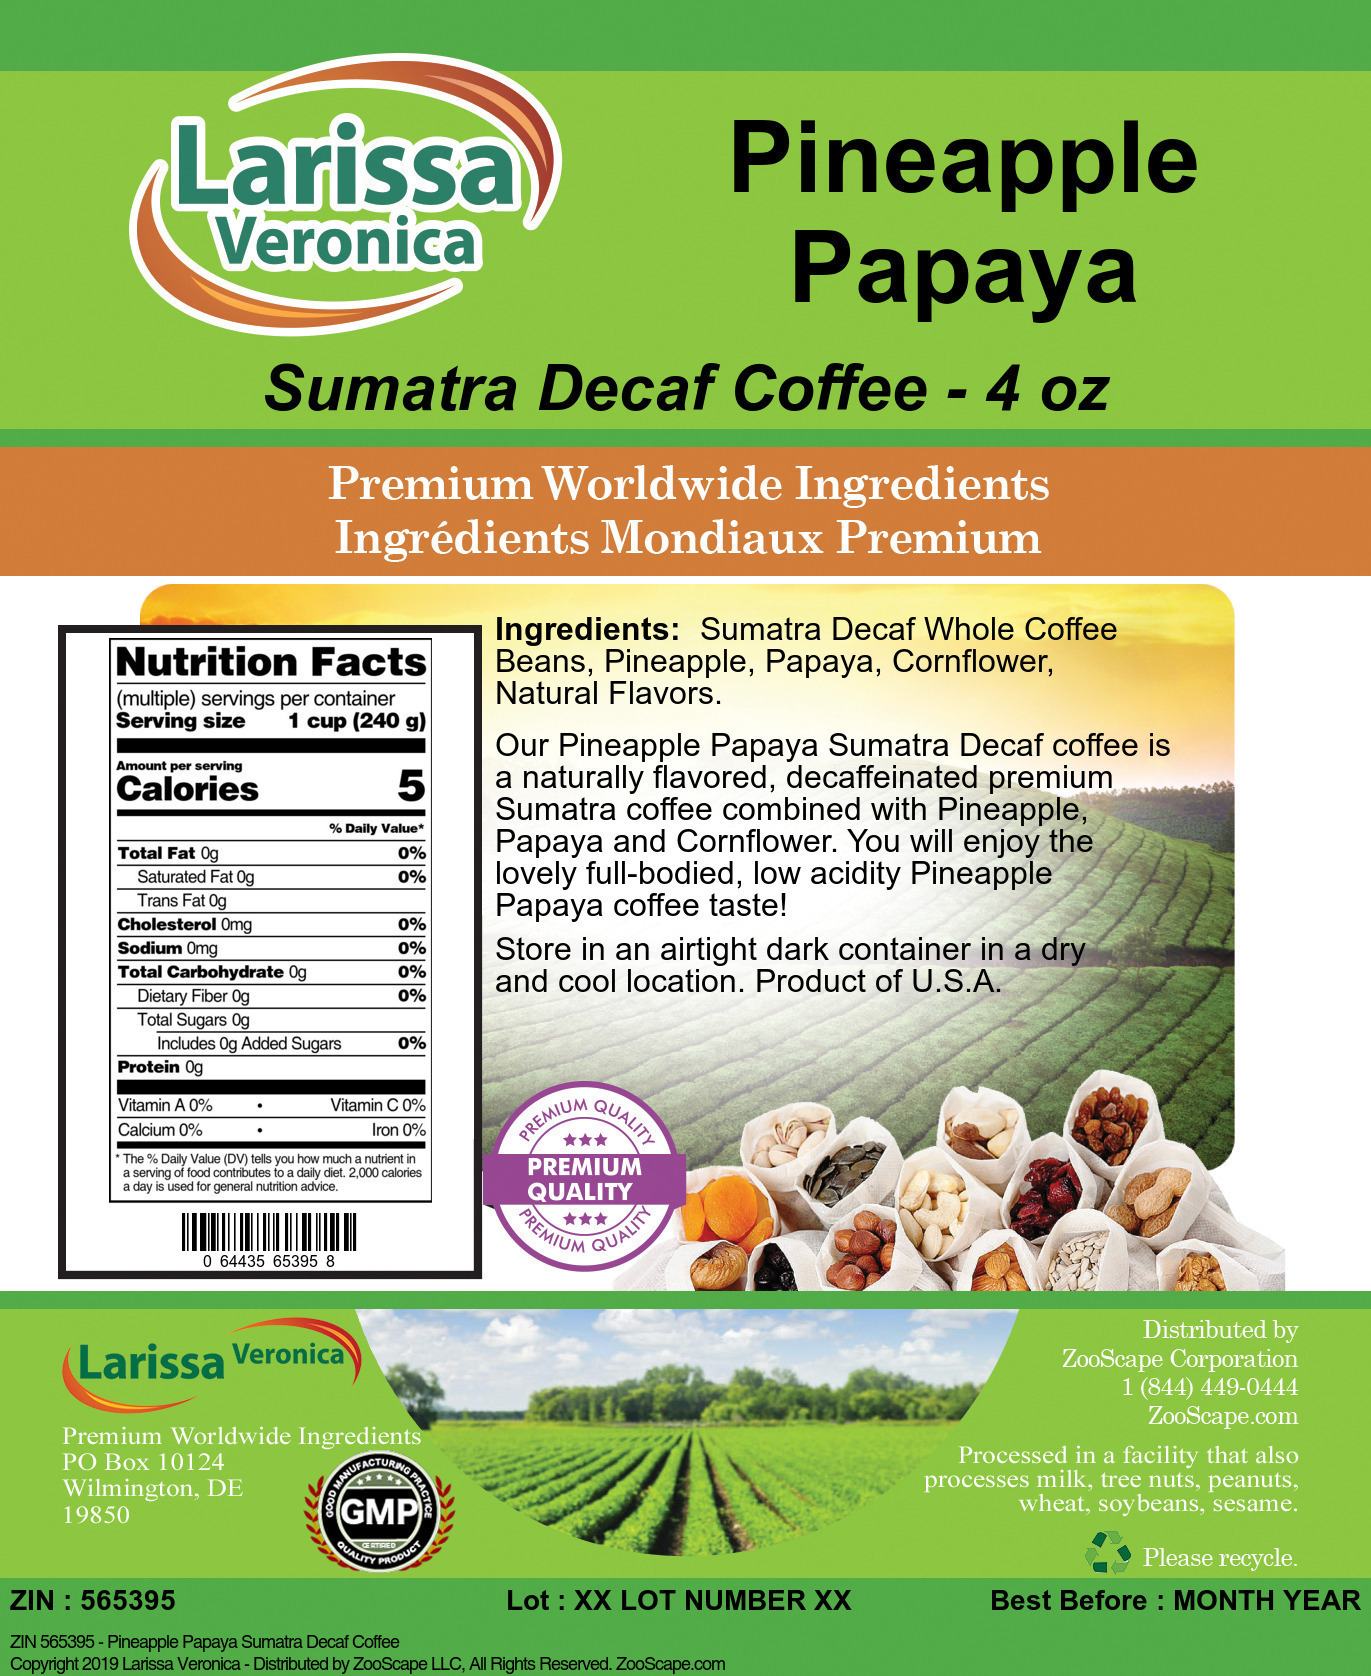 Pineapple Papaya Sumatra Decaf Coffee - Label